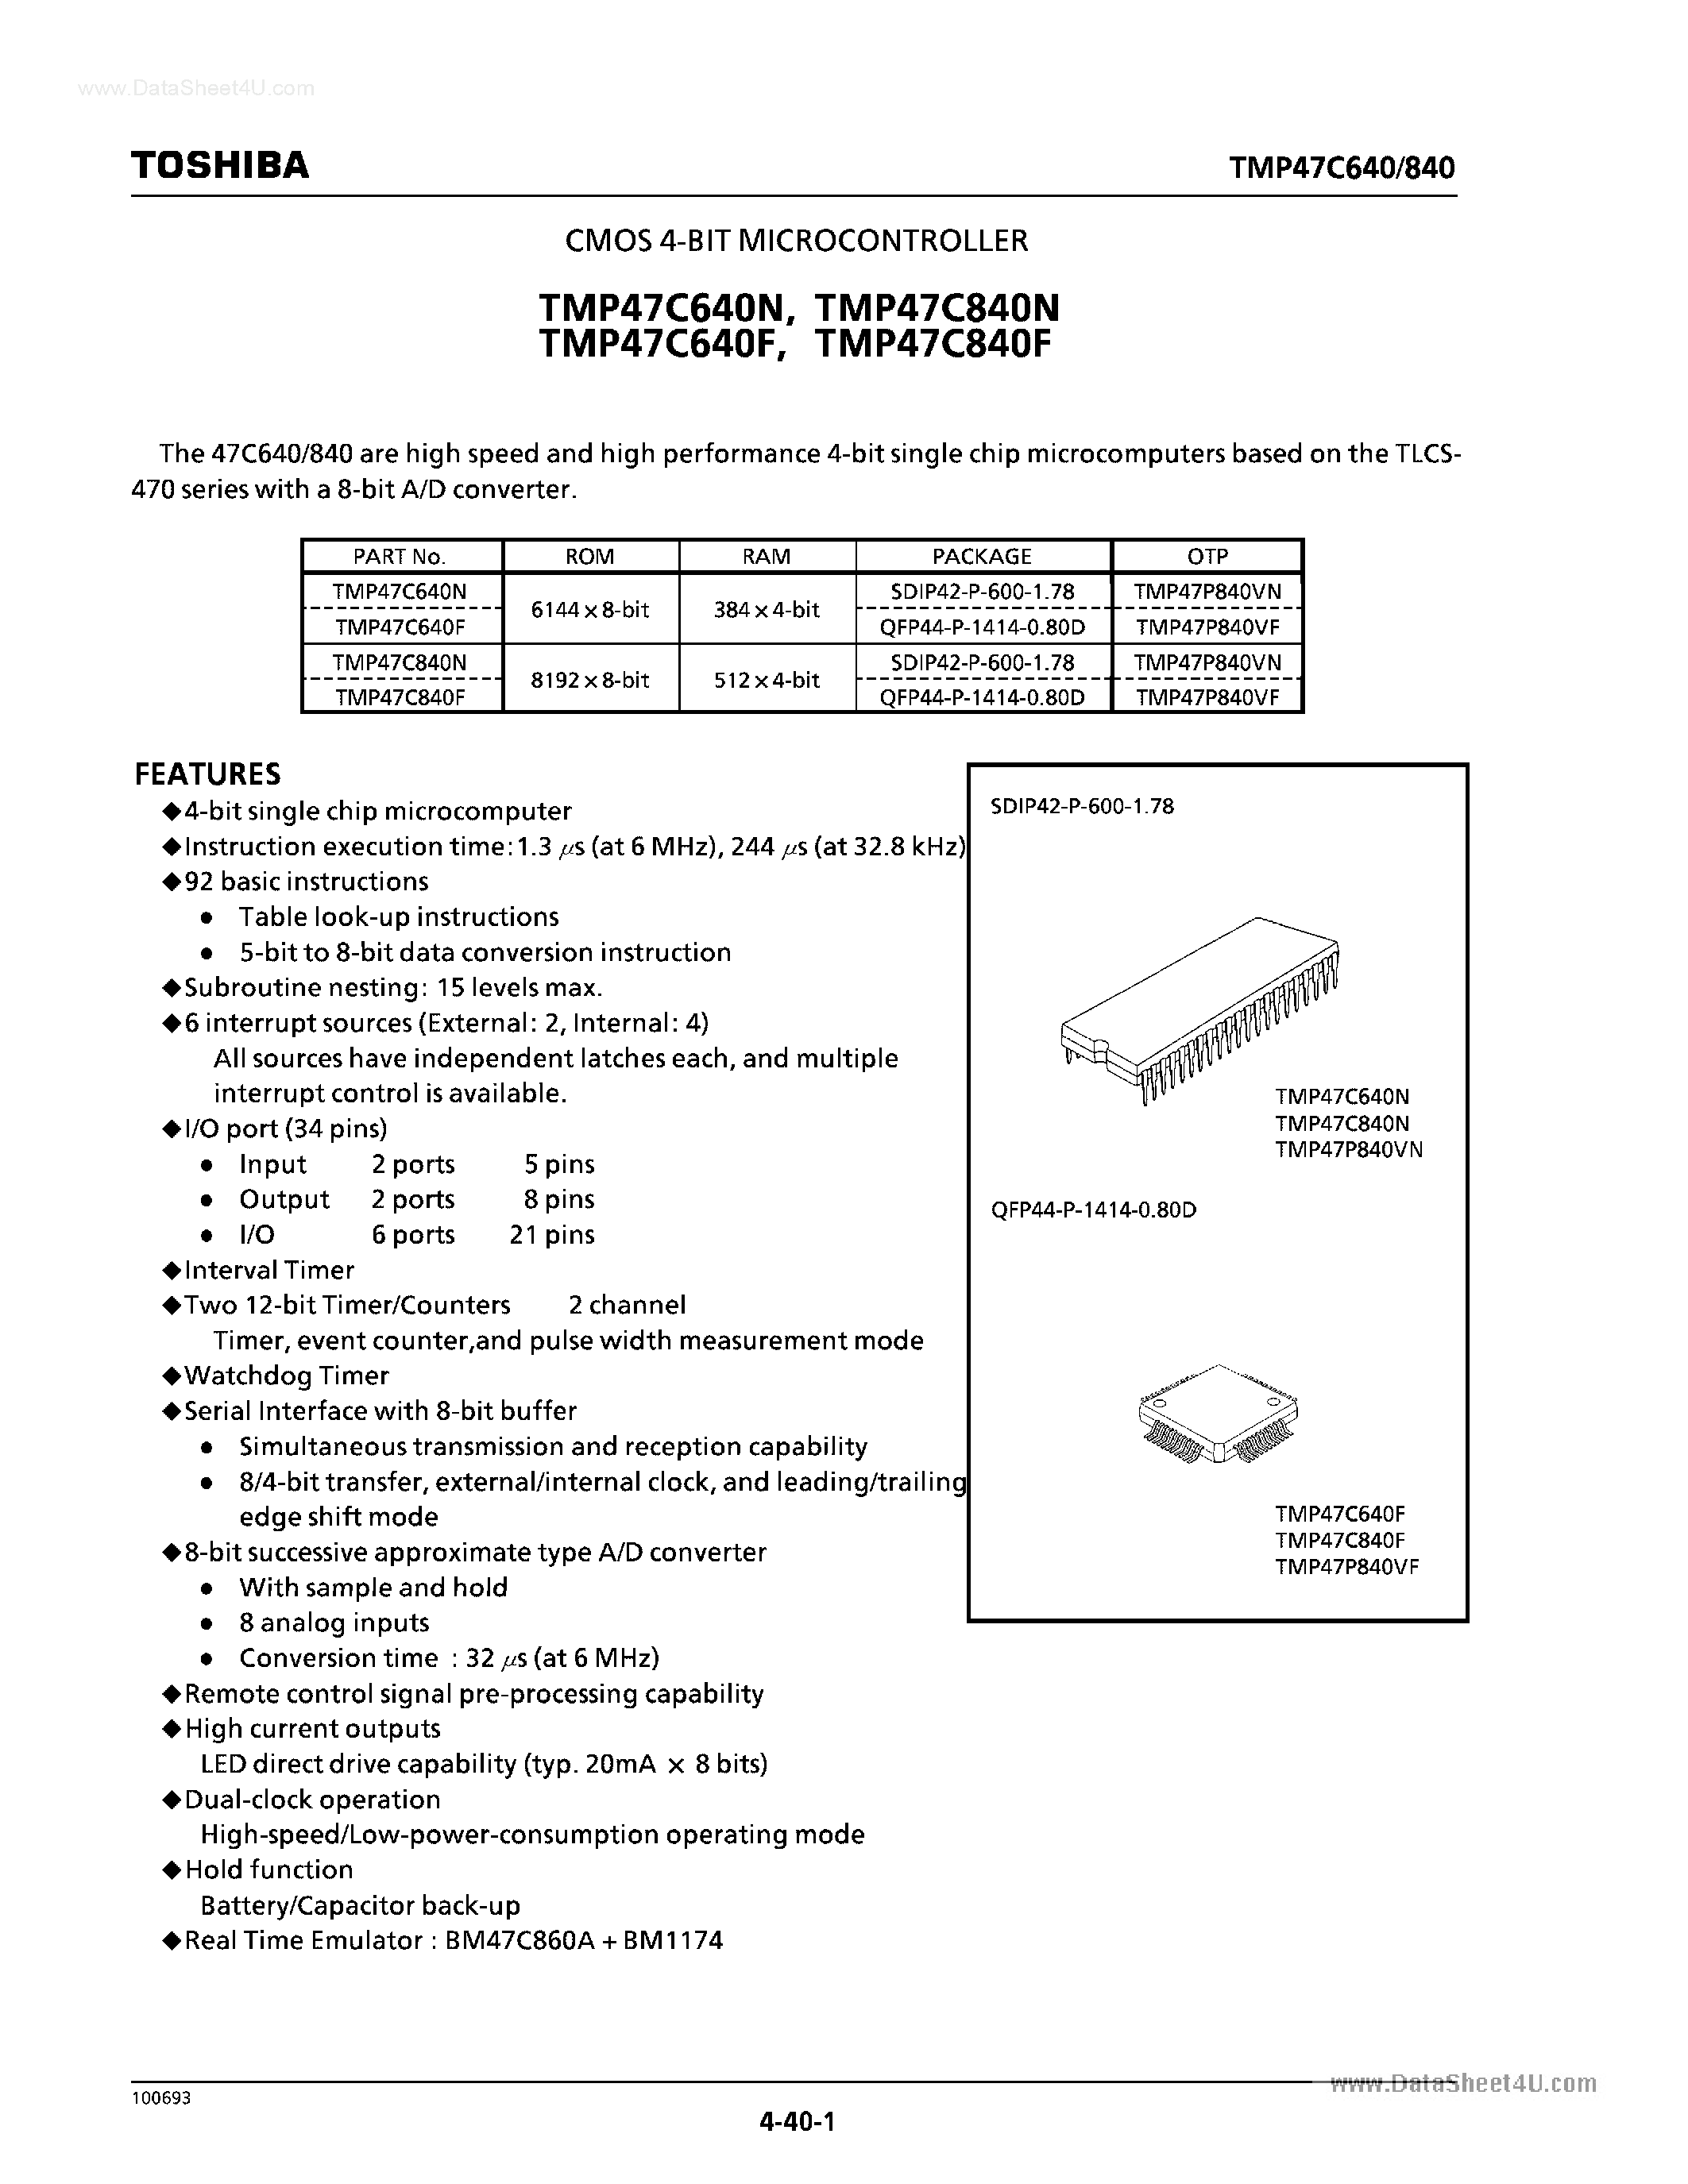 Даташит TMP47C640F - (TMP47C640F / TMP47C840) CMOS 4-bit Microcontroller страница 1